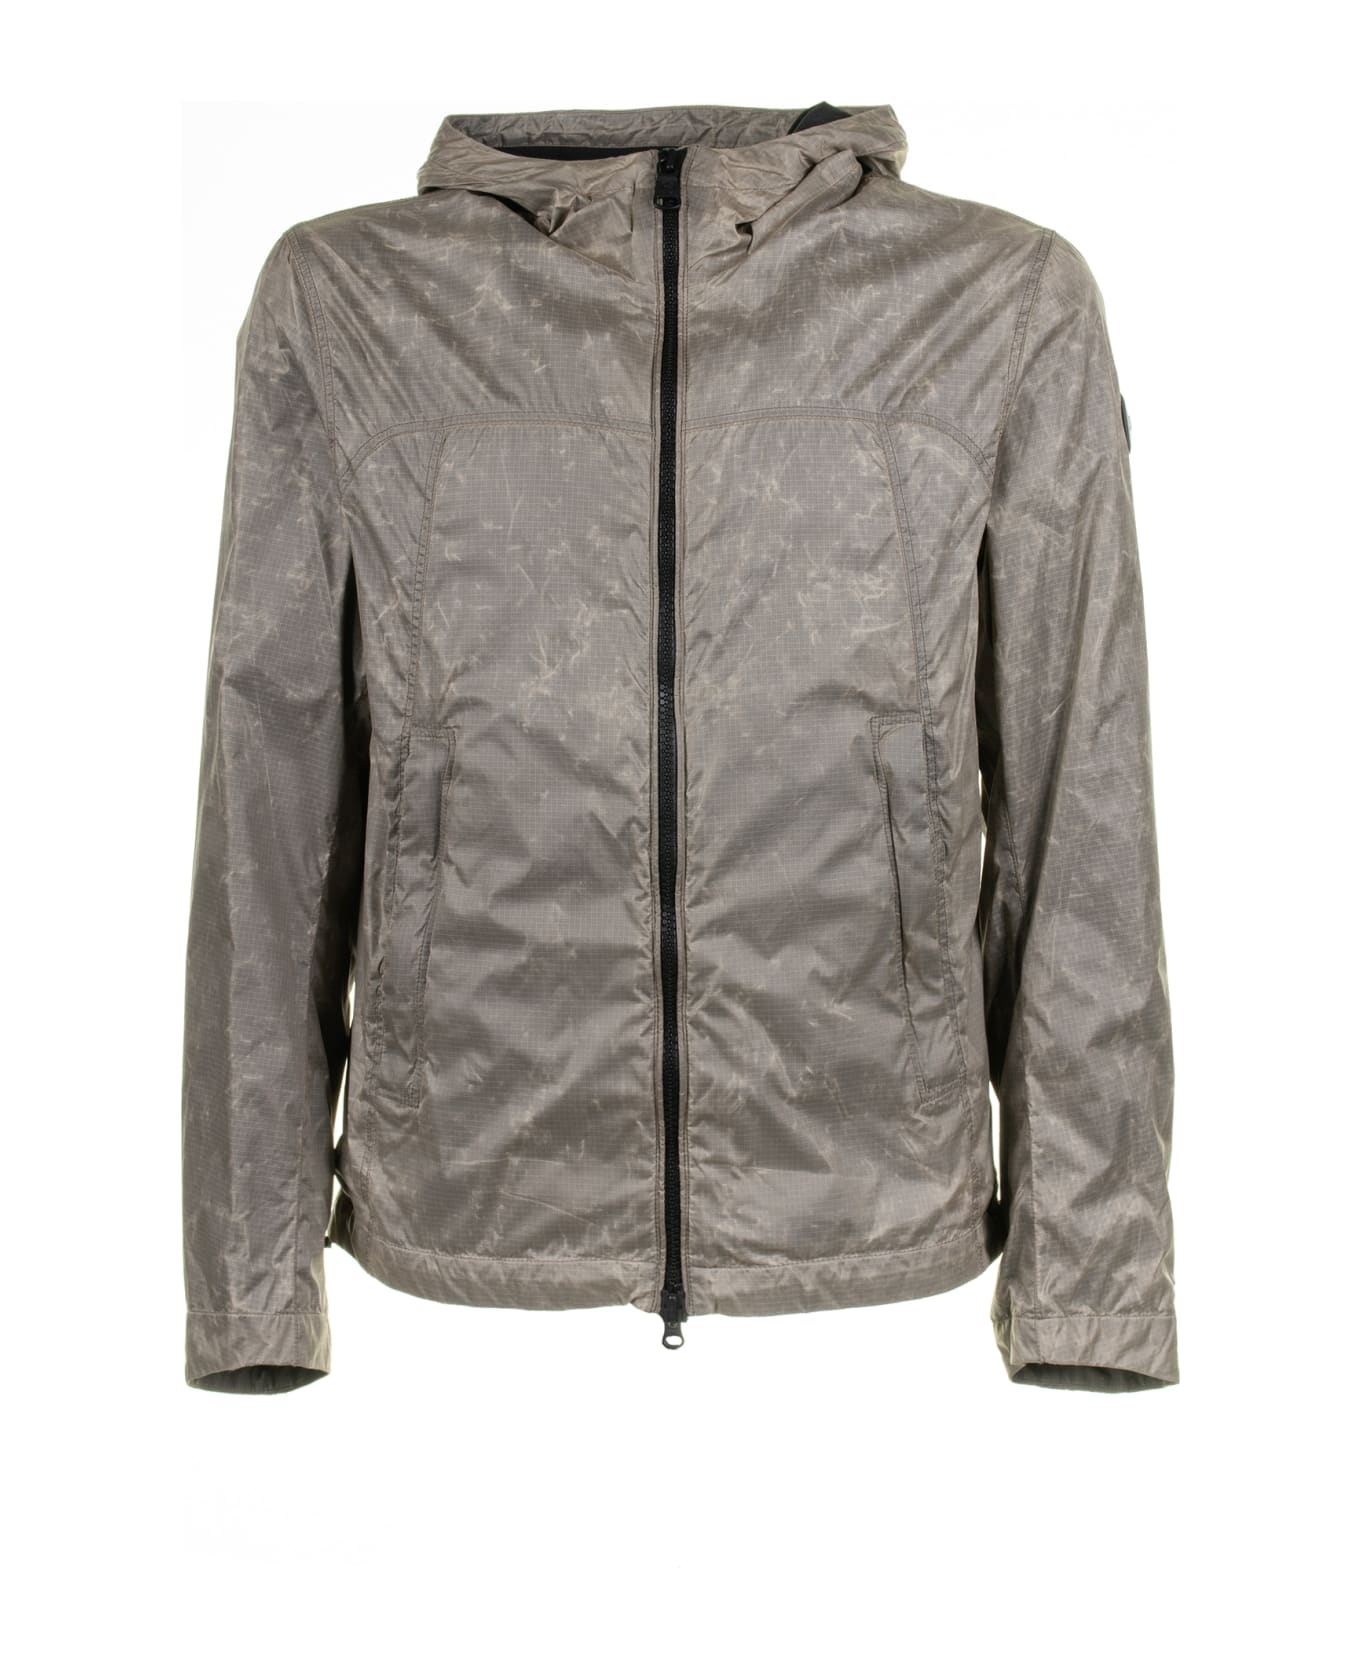 Colmar Jacket With Hood In Waxed Fabric - BEIGE